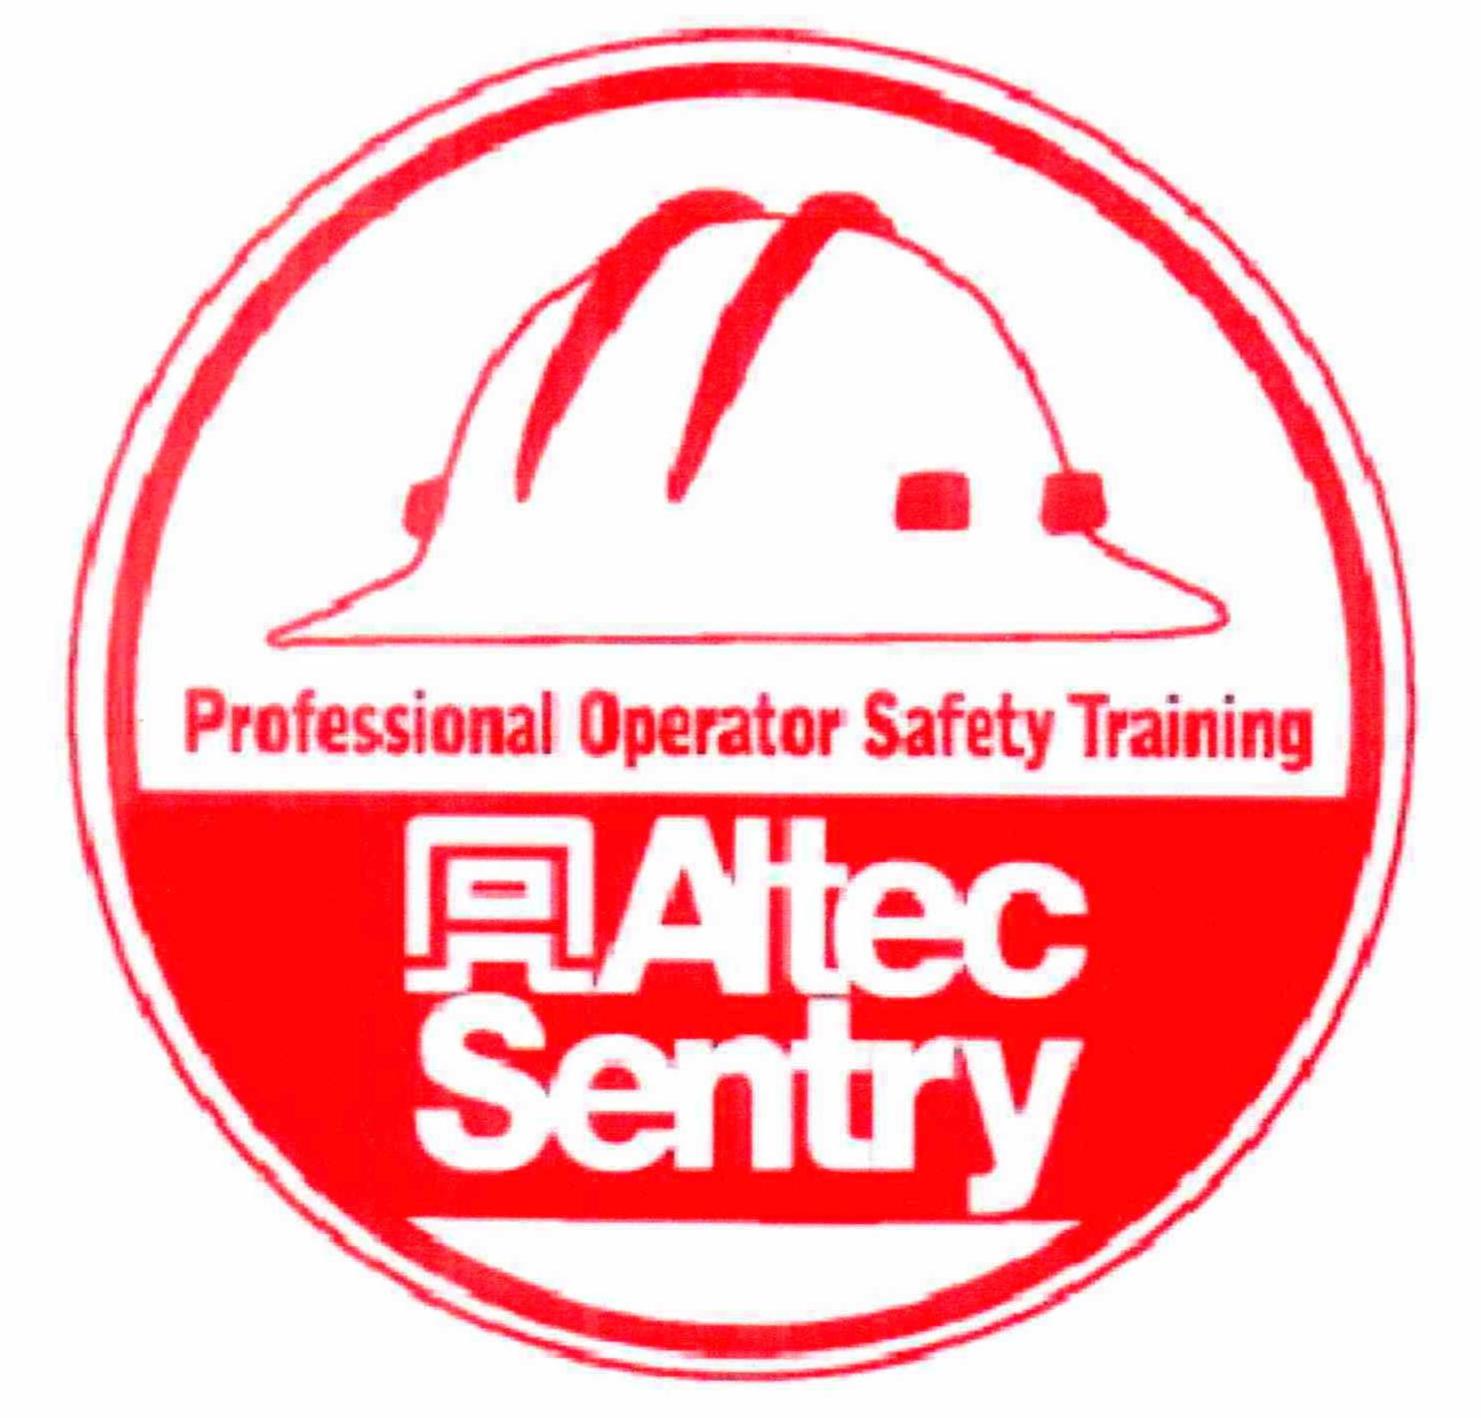 PROFESSIONAL OPERATOR SAFETY TRAINING AALTEC SENTRY